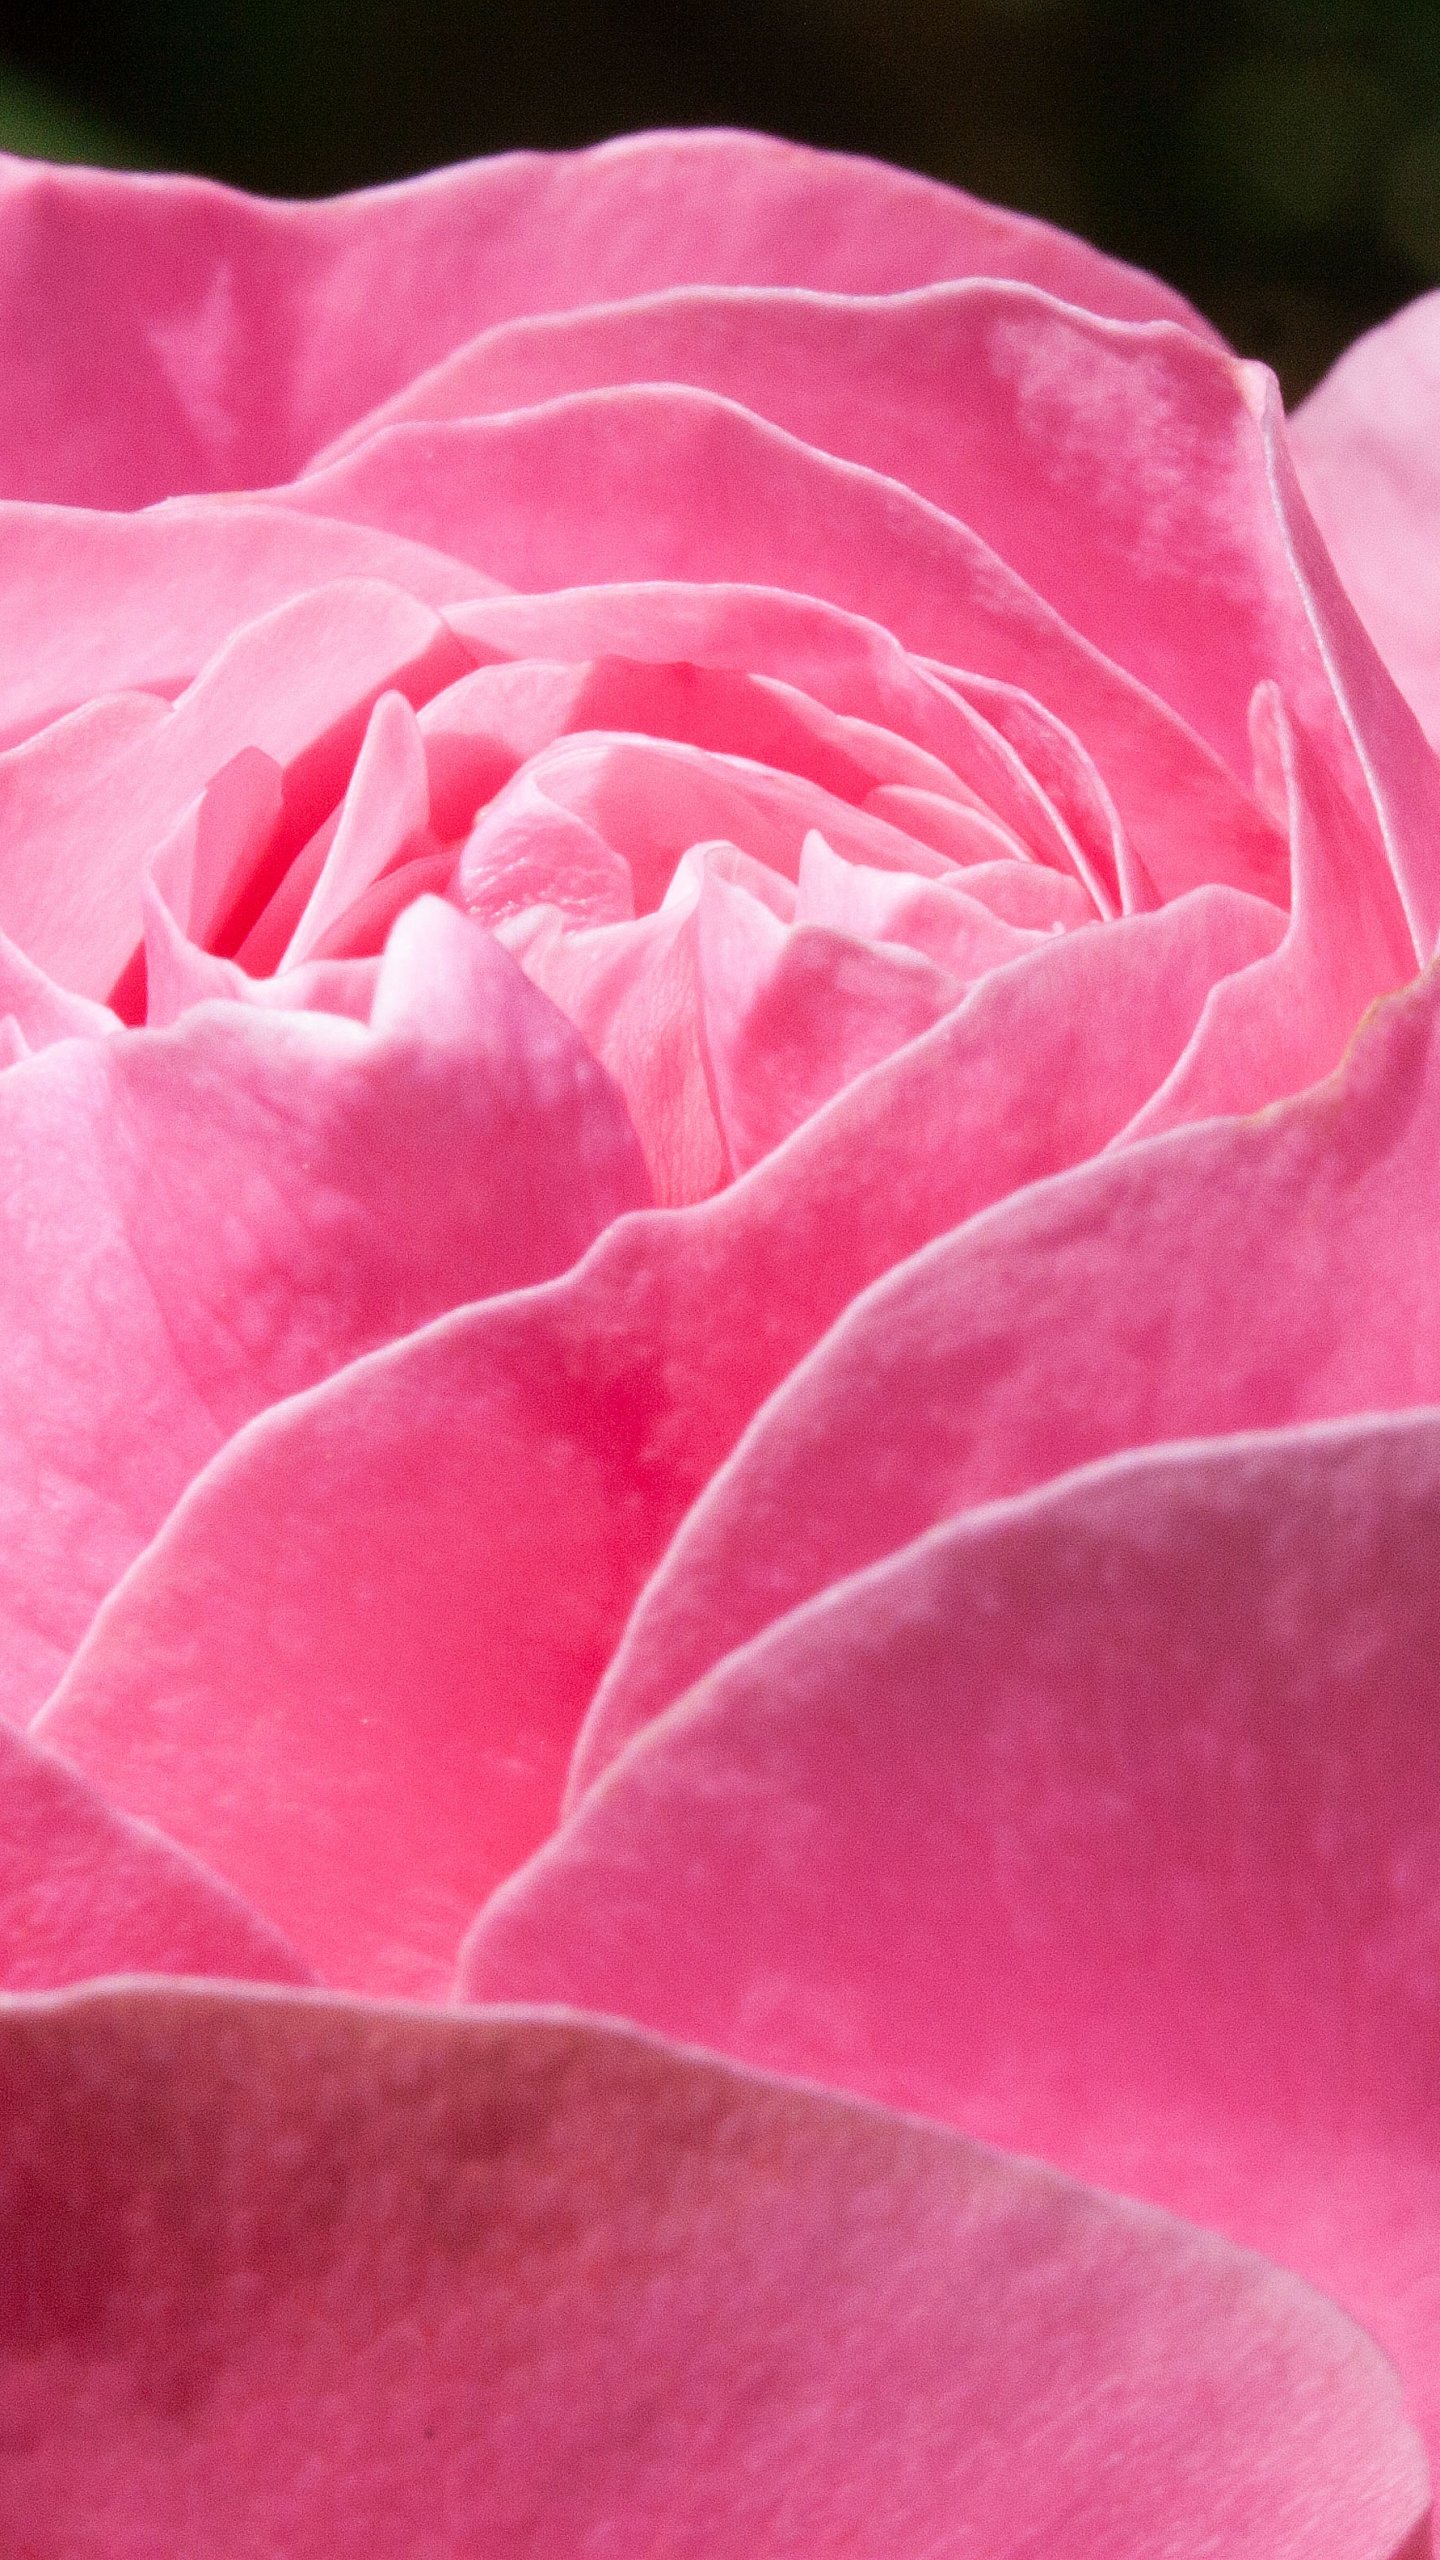 rose wallpaper,petal,pink,flower,close up,garden roses